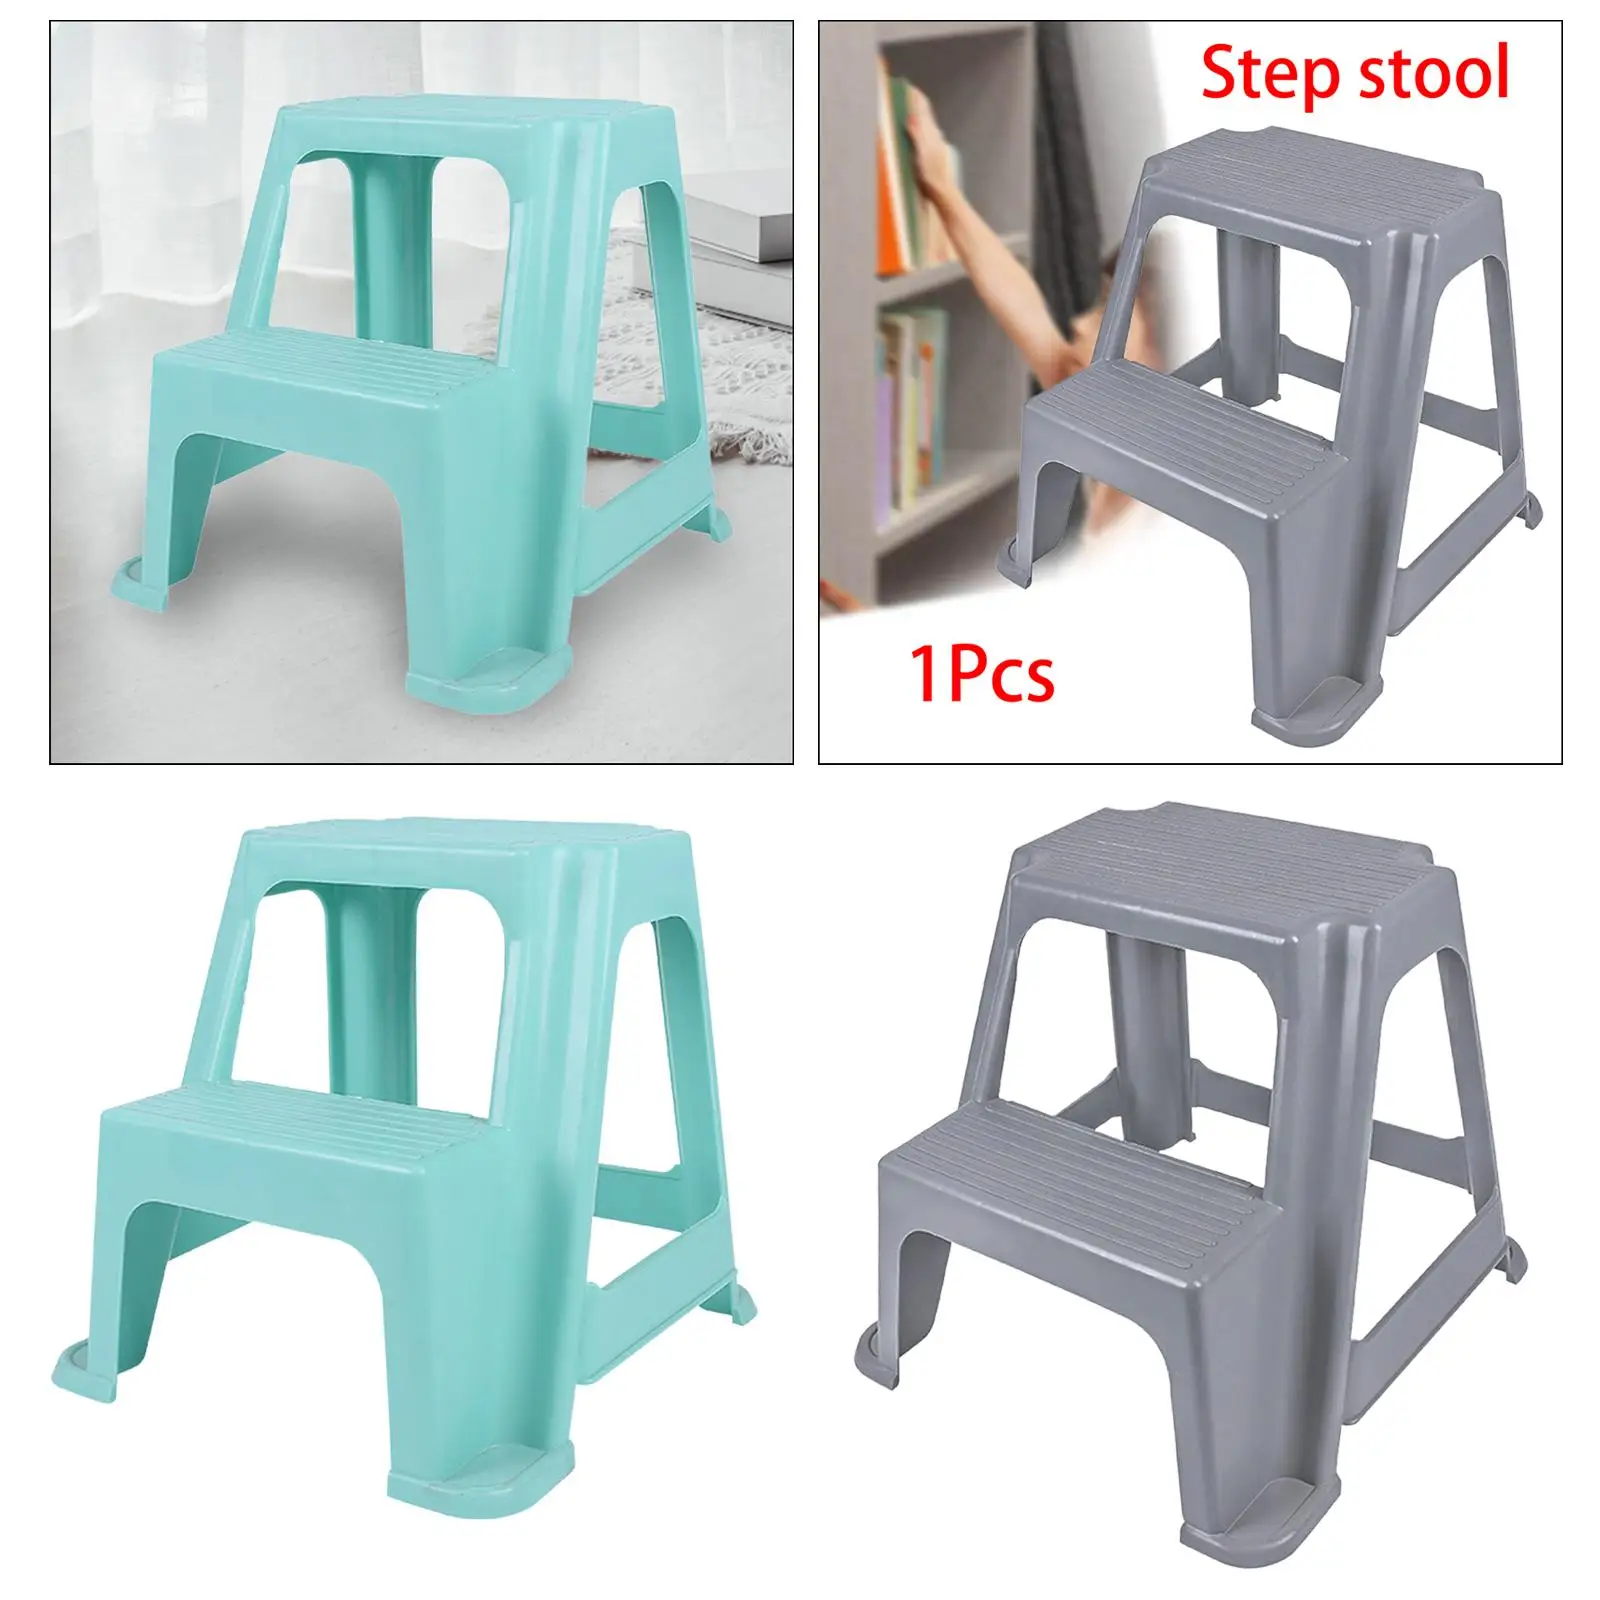 2 Step Stool Stepping Stool Anti Slip Bedside Step Stool Footstool Two Step Stool Stepstool for Kids Adults Dogs Elderly Nursery